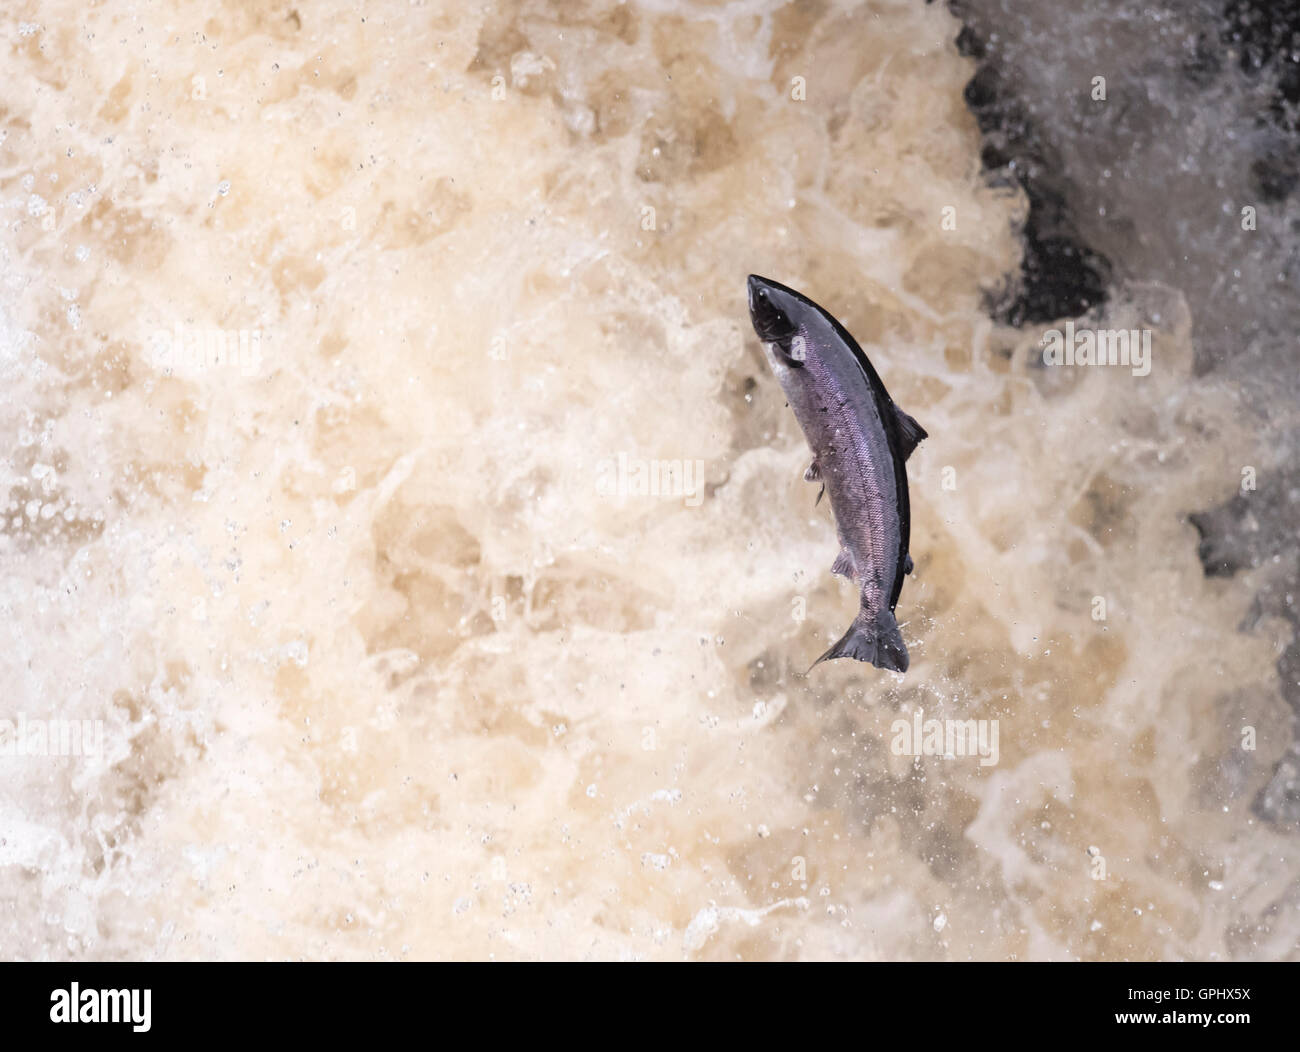 A determined Atlantic Salmon (Salmo salar) powers it's way up Rogie Falls in Scotland Stock Photo